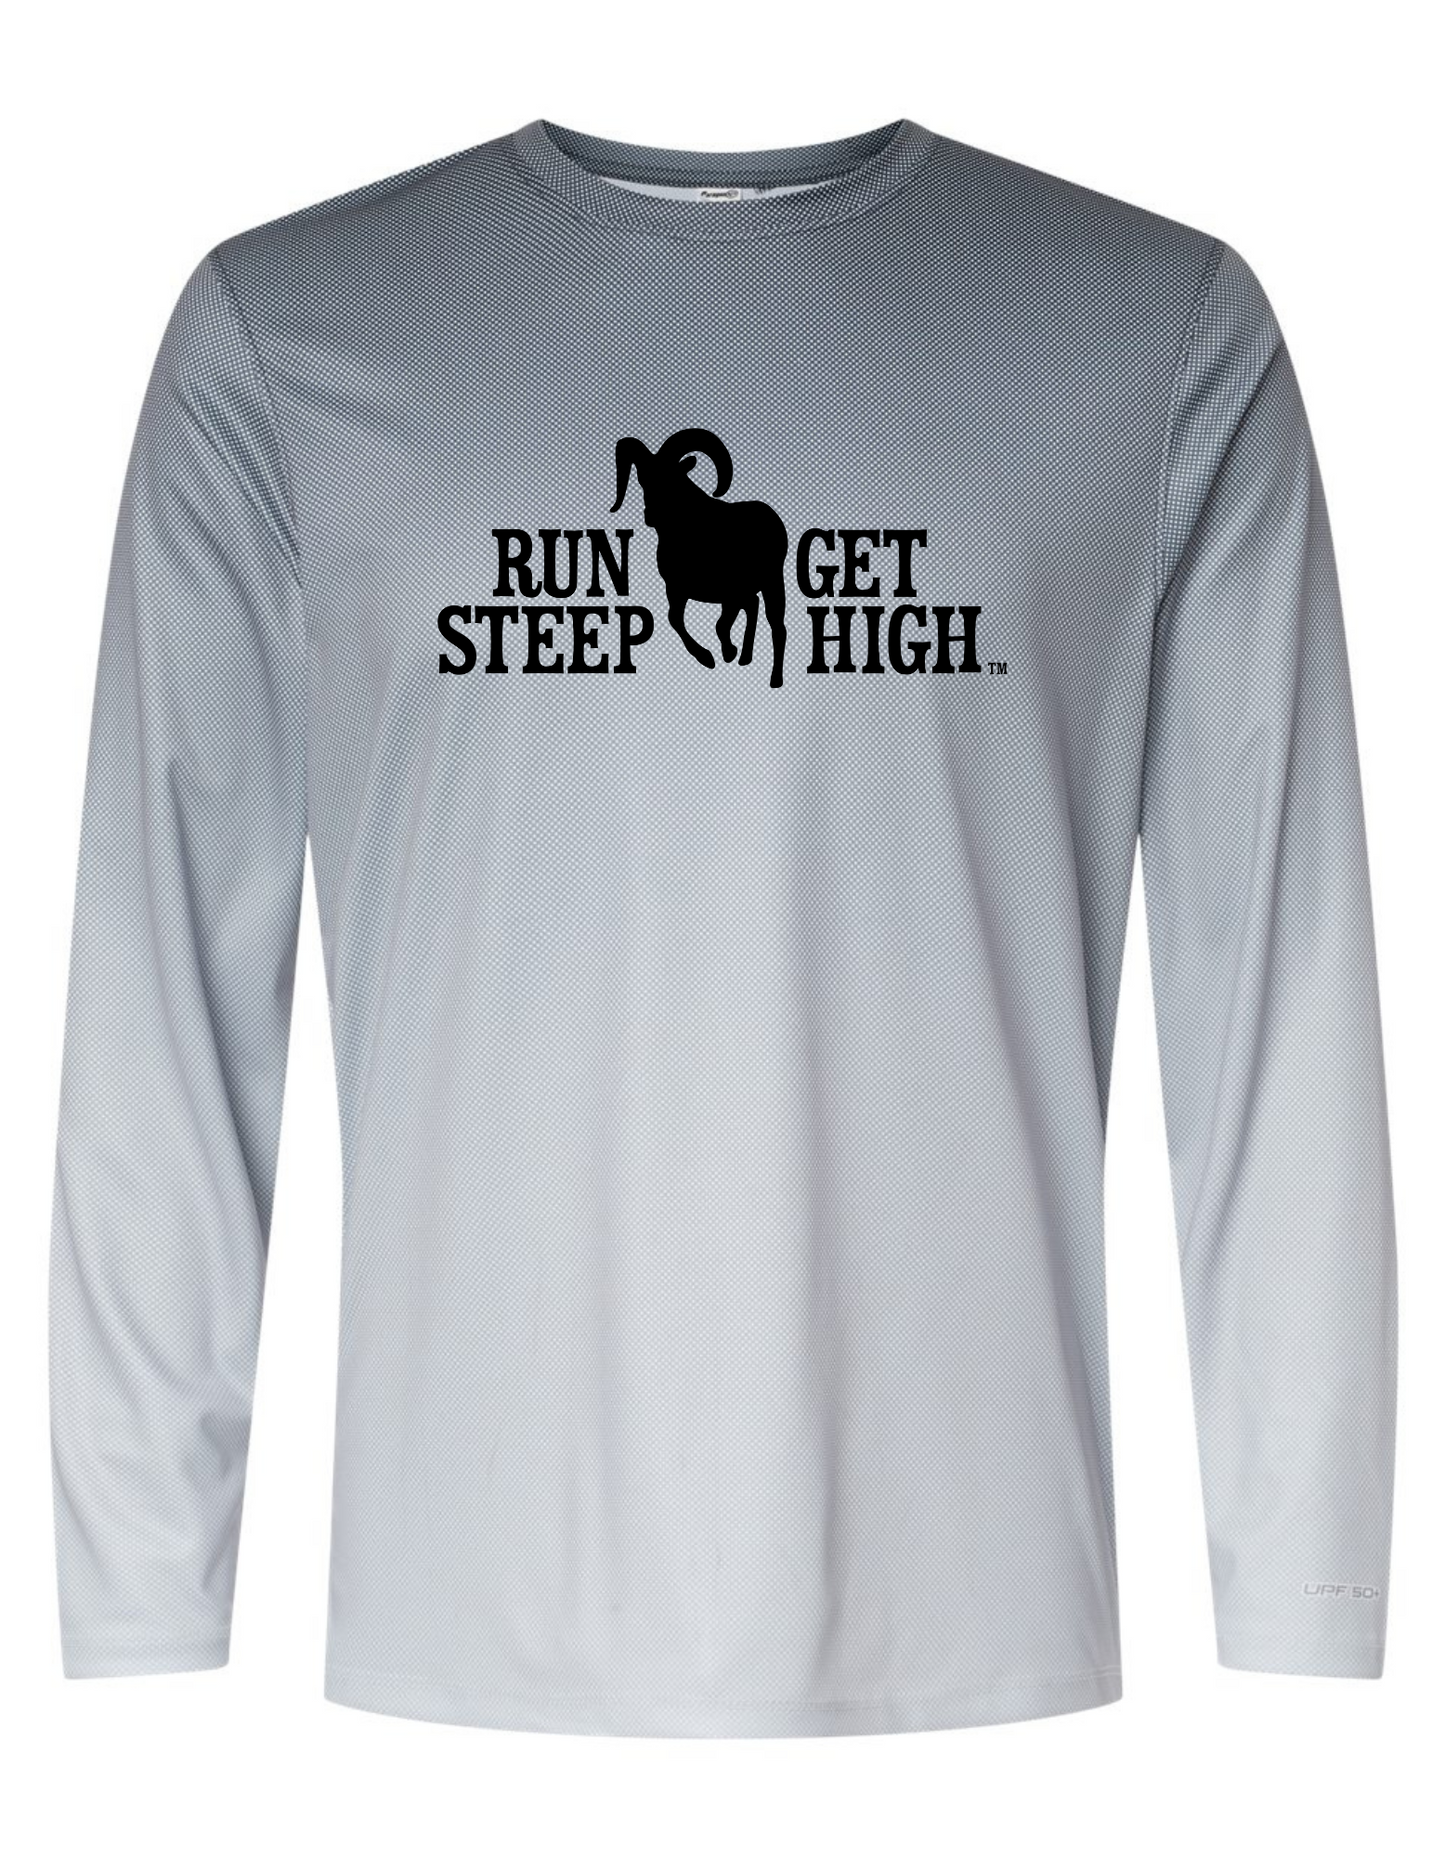 Run Steep Get High Performance Long Sleeve (UPF 50+)